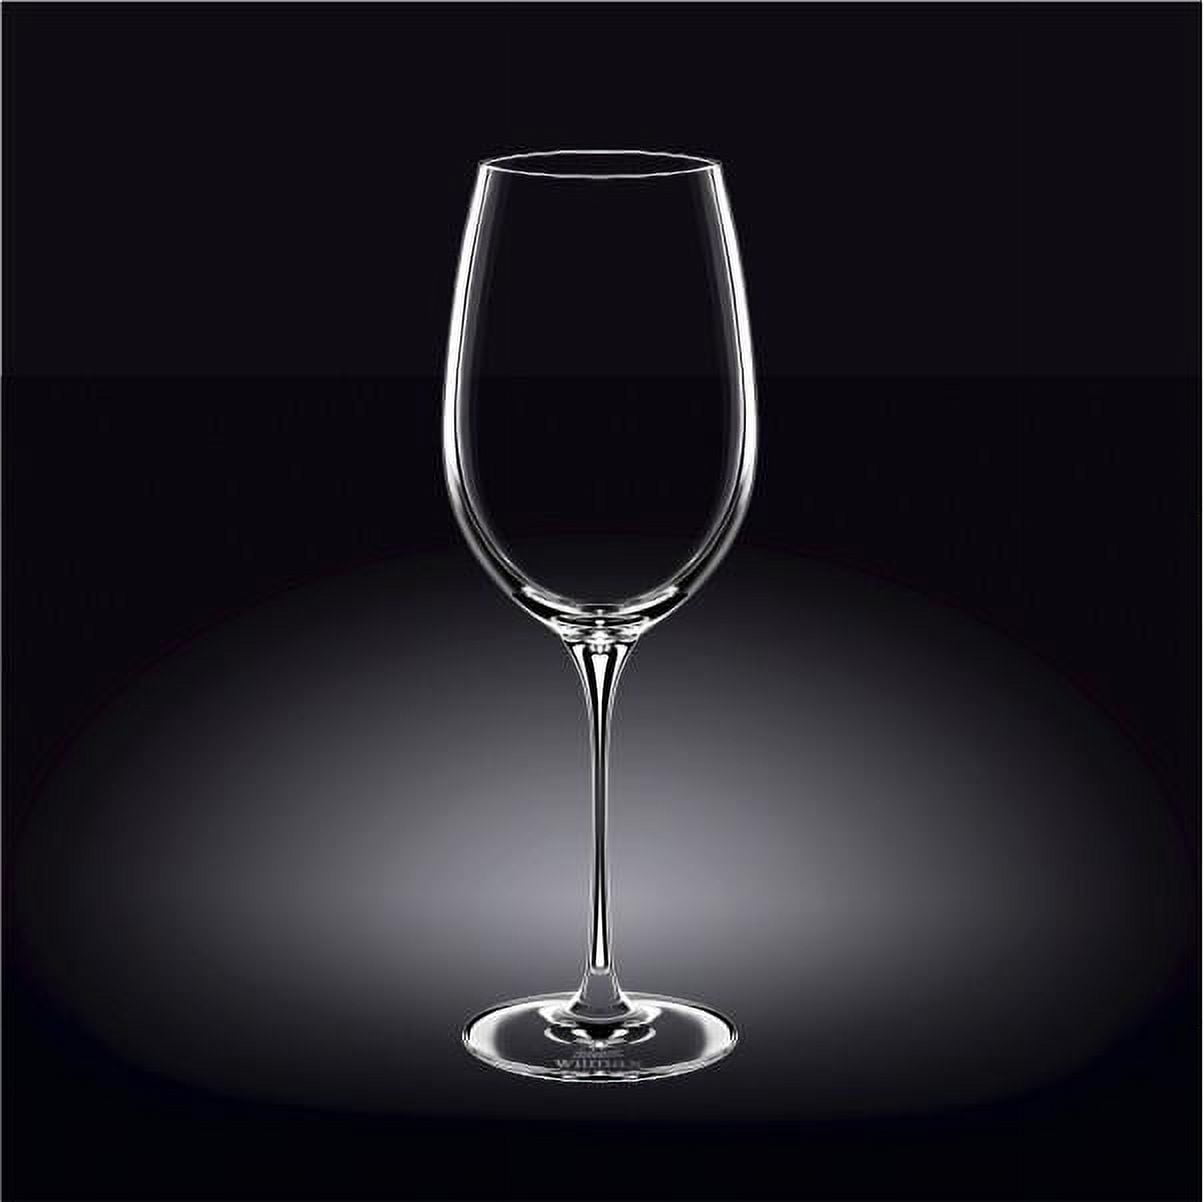 G Francis Unique Wine Glasses Set of 4 - 16oz Square Bottom Modern Stemware